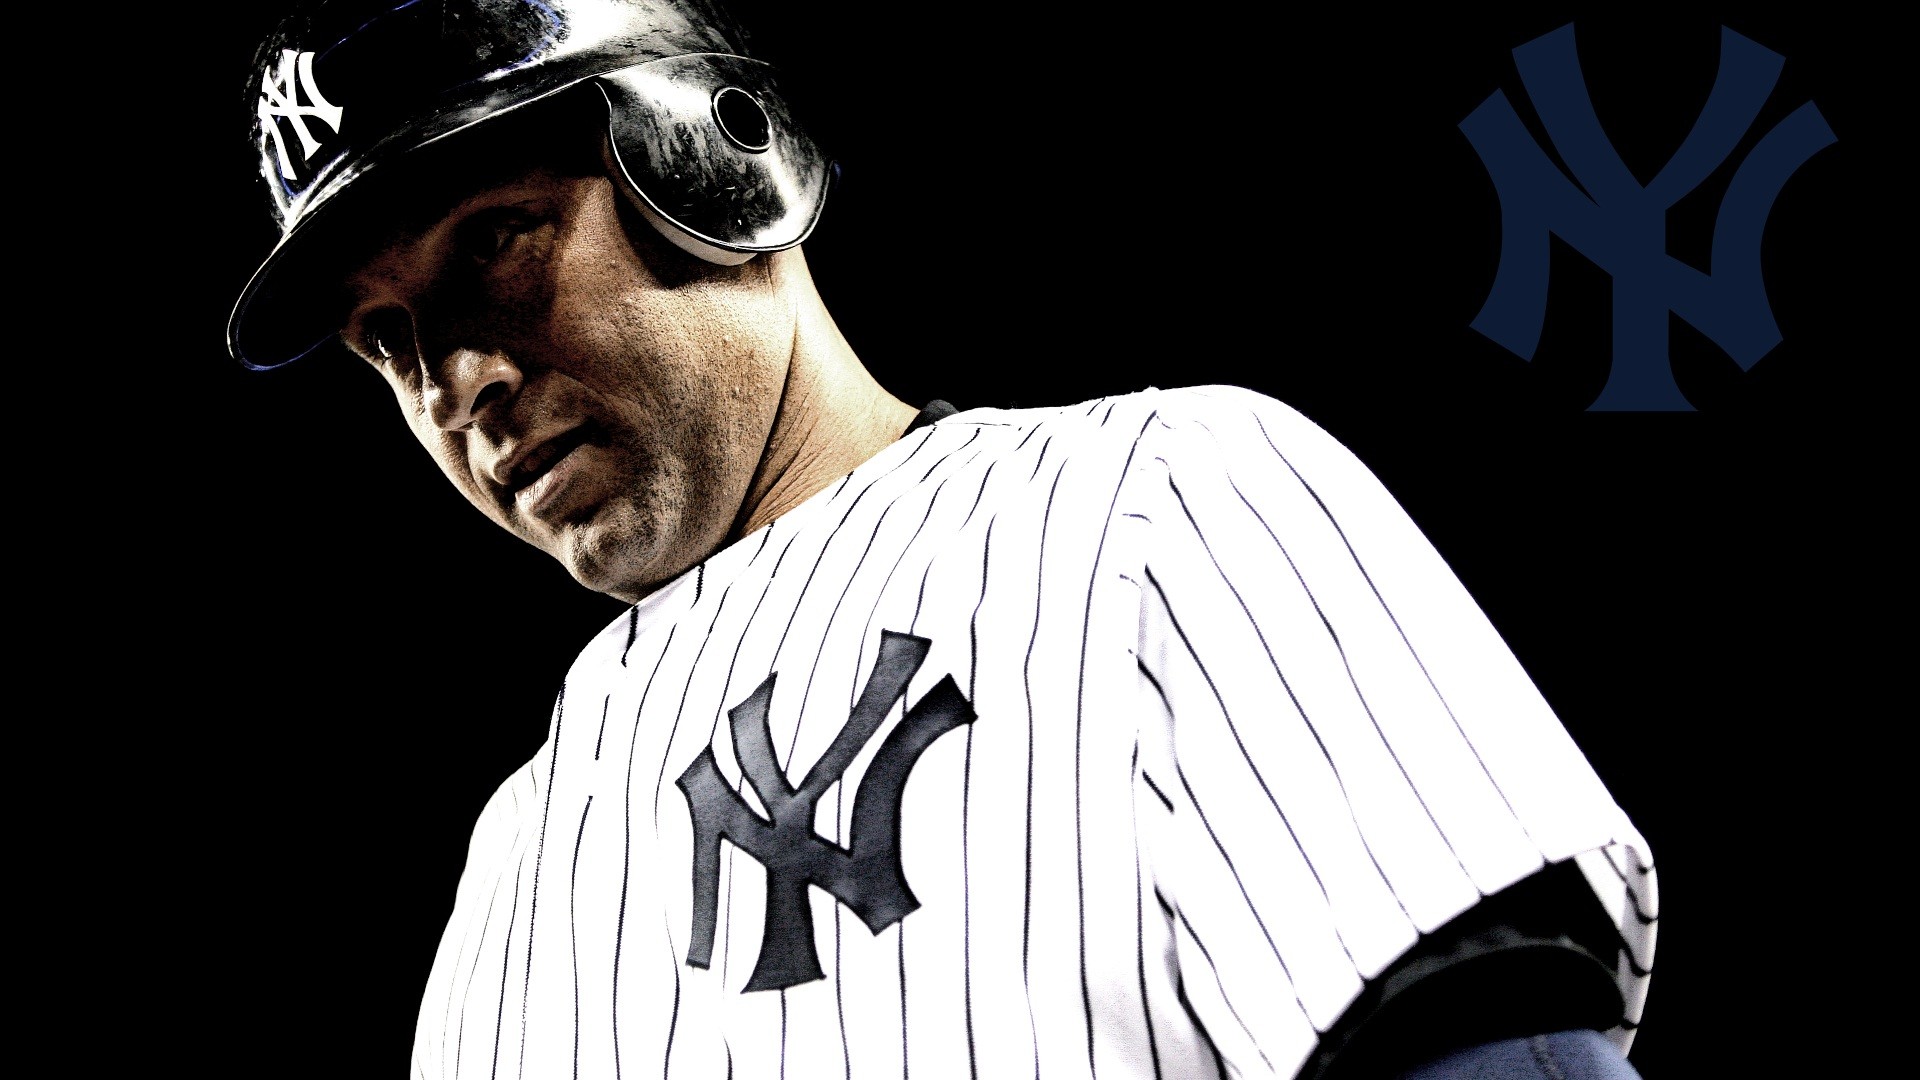 1920x1080, New York Yankees Iphone 5c Wallpaper 
 Data - Derek Jeter Black Background - HD Wallpaper 